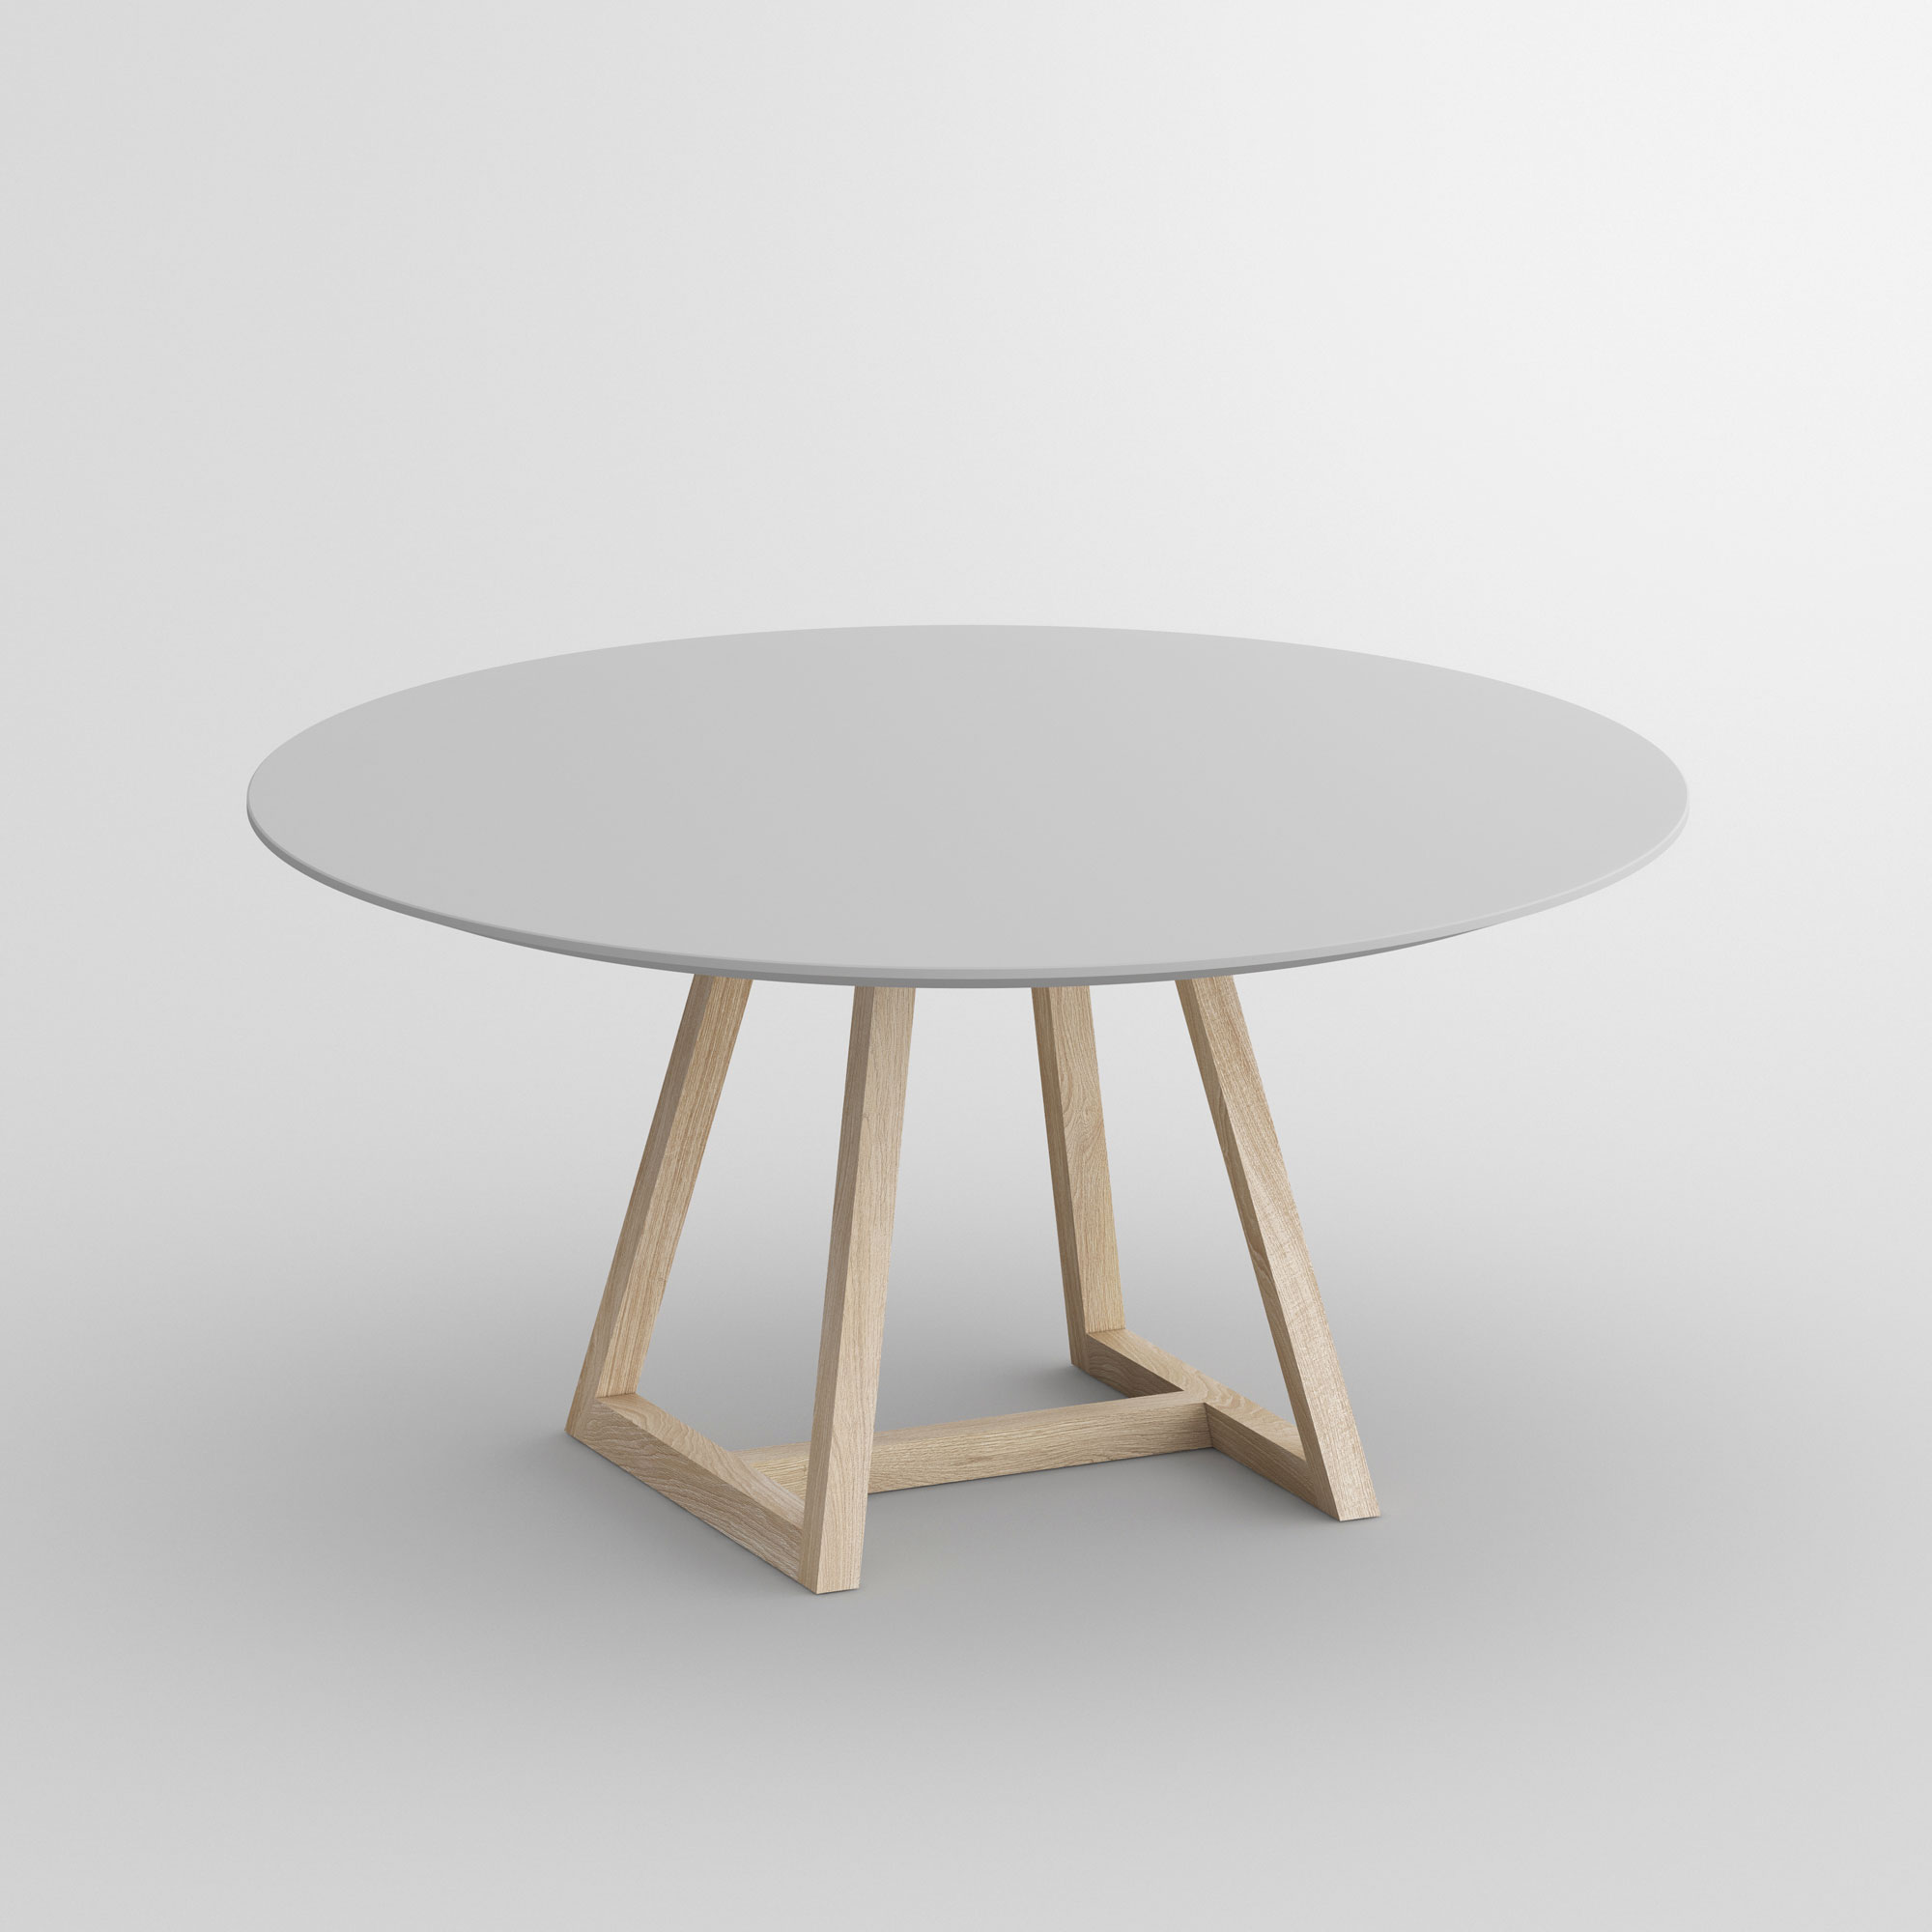 Round Linoleum Table MARGO ROUND LINO cam1 custom made in solid wood by vitamin design